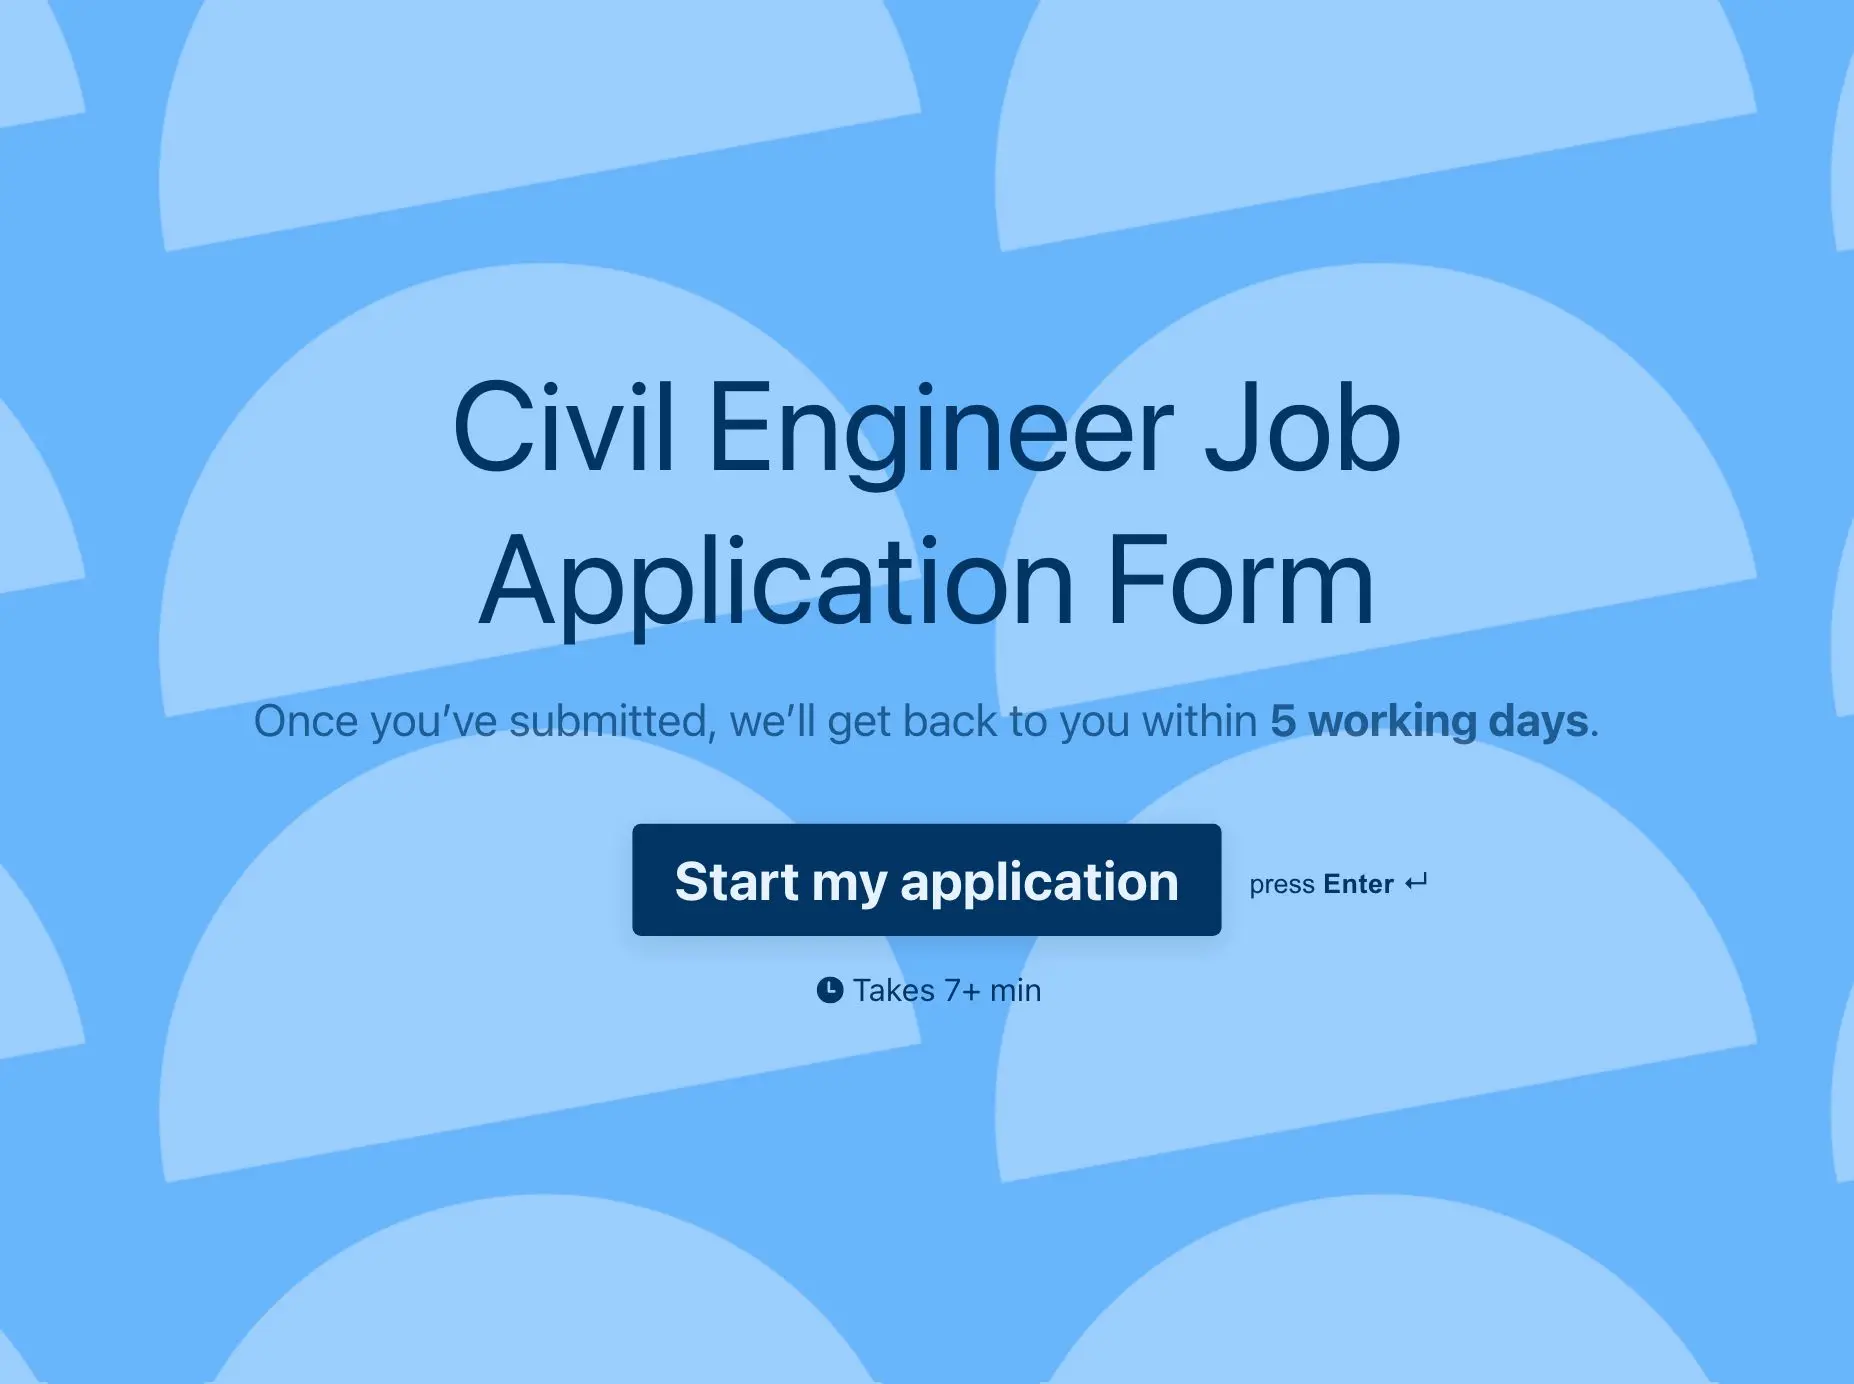 Civil Engineer Job Application Form Template Hero